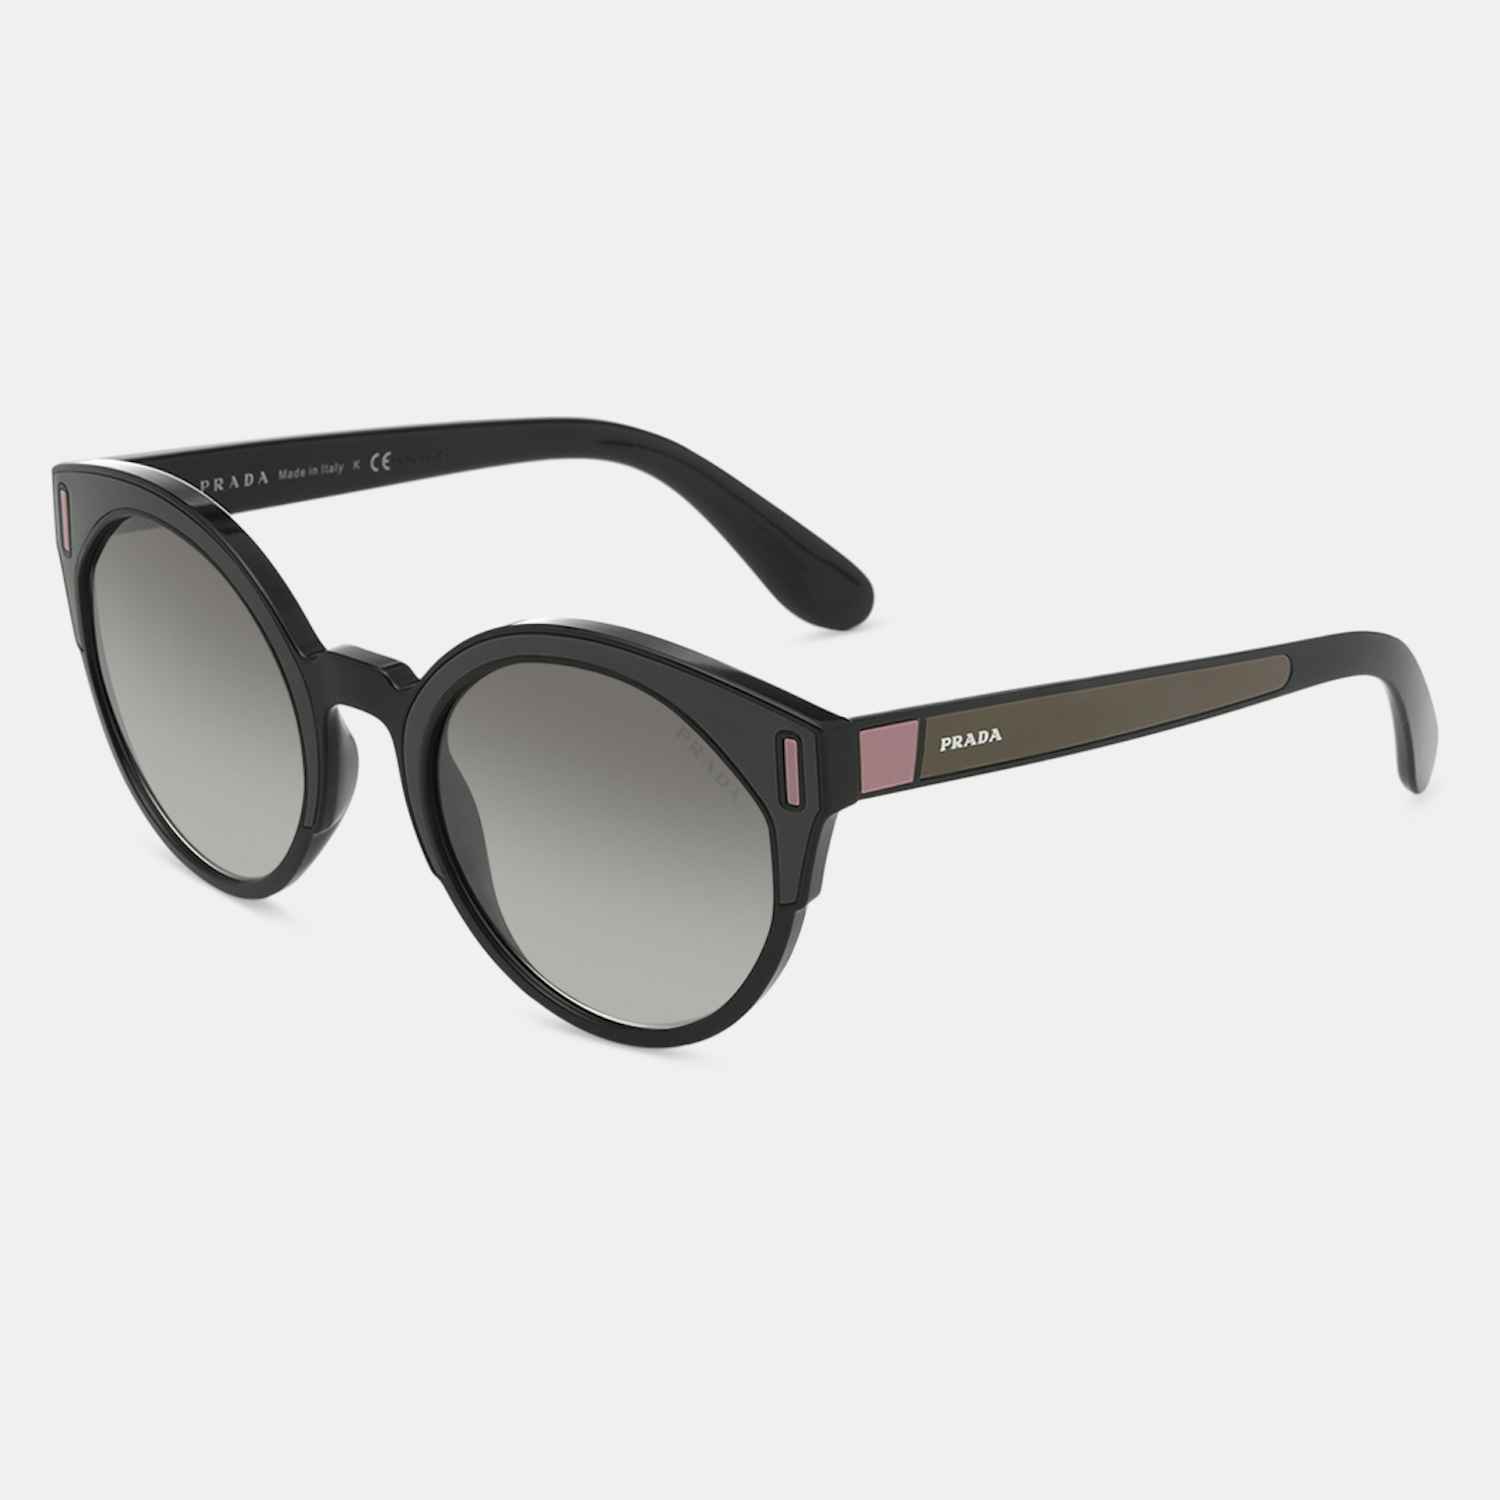 Prada Catwalk Ladies Sunglasses | Eyewear | Sunglasses | Drop